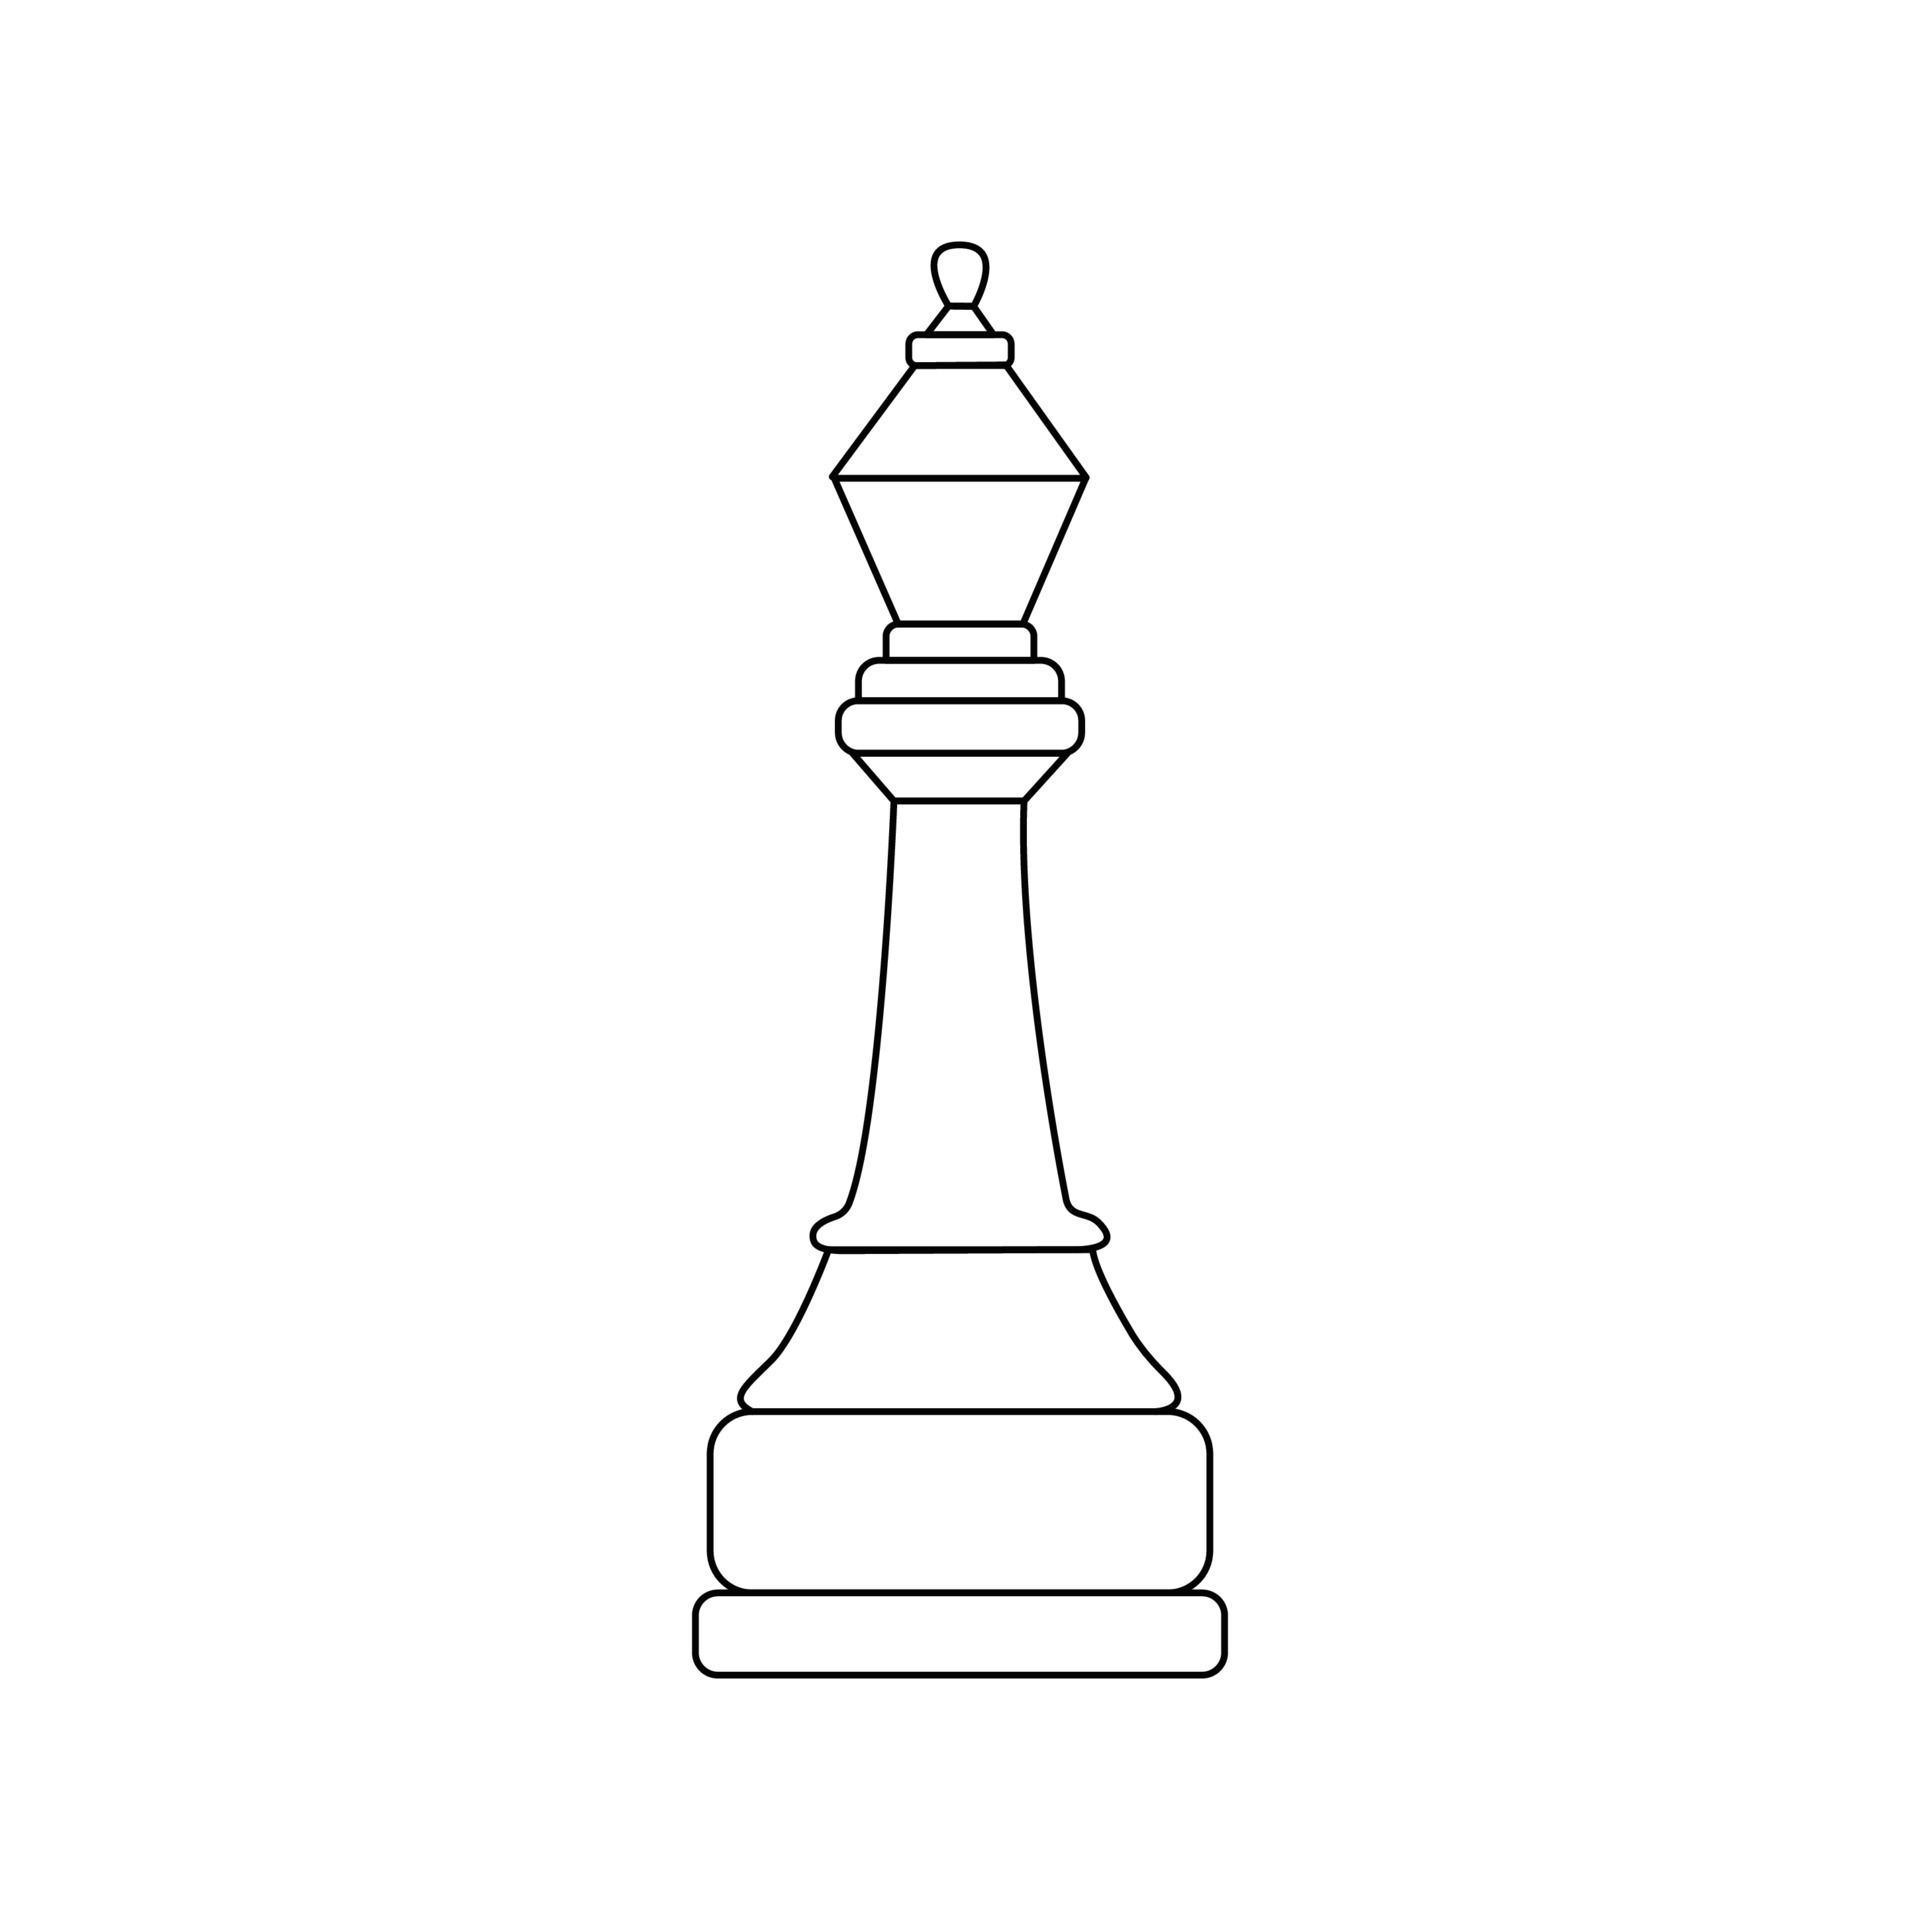 Preto bispo contra branco xadrez peças em borda 20299412 Foto de stock no  Vecteezy